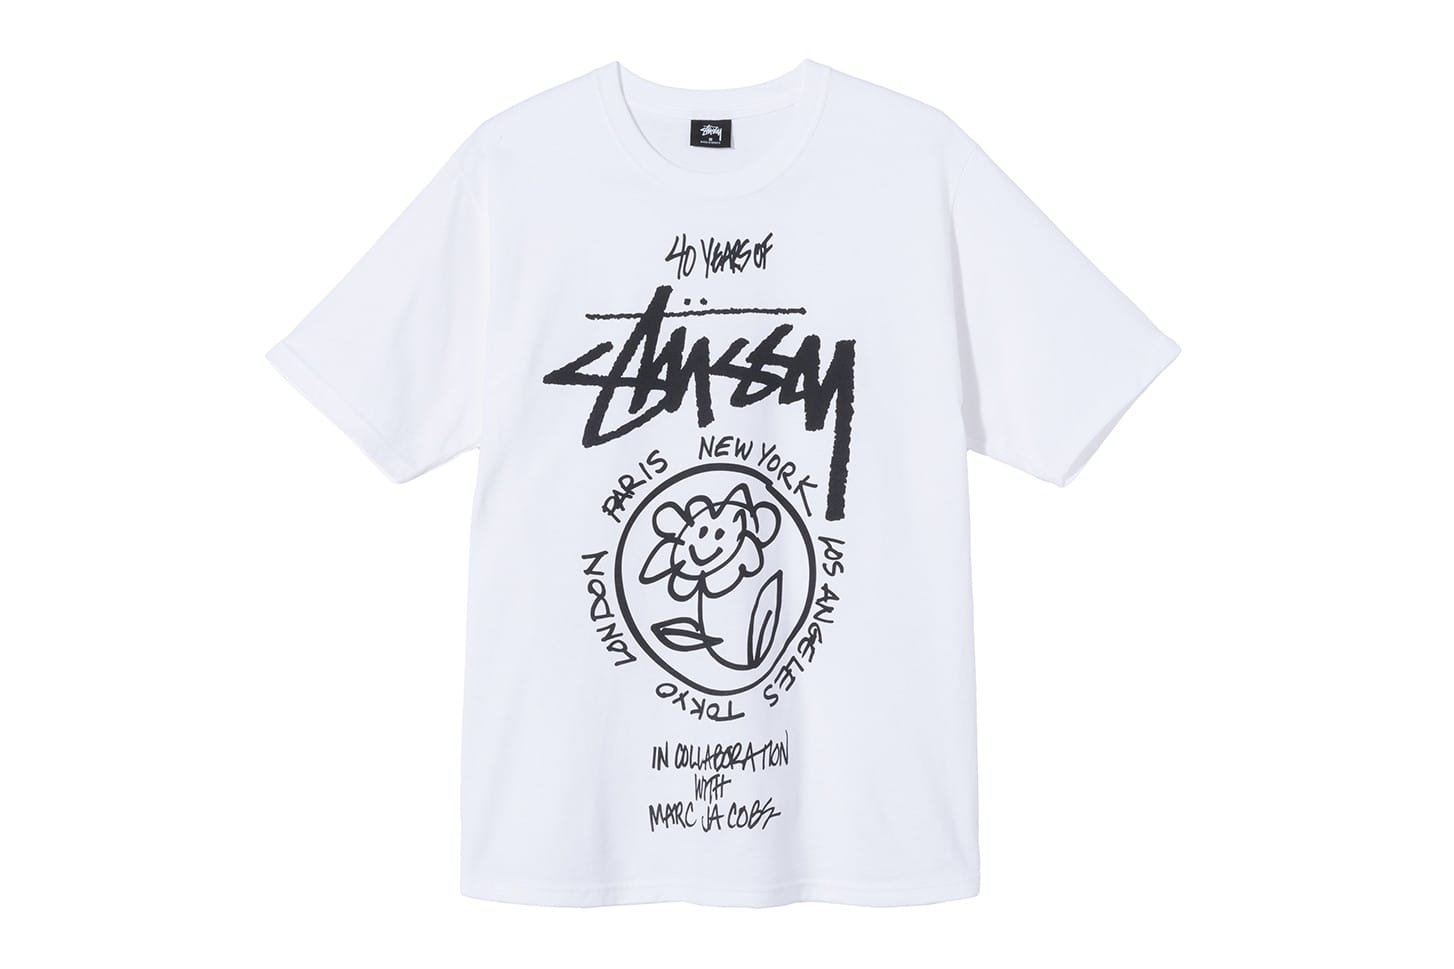 Stüssy 40th Anniversary World Tour T-Shirt Collaborations | HYPEBEAST